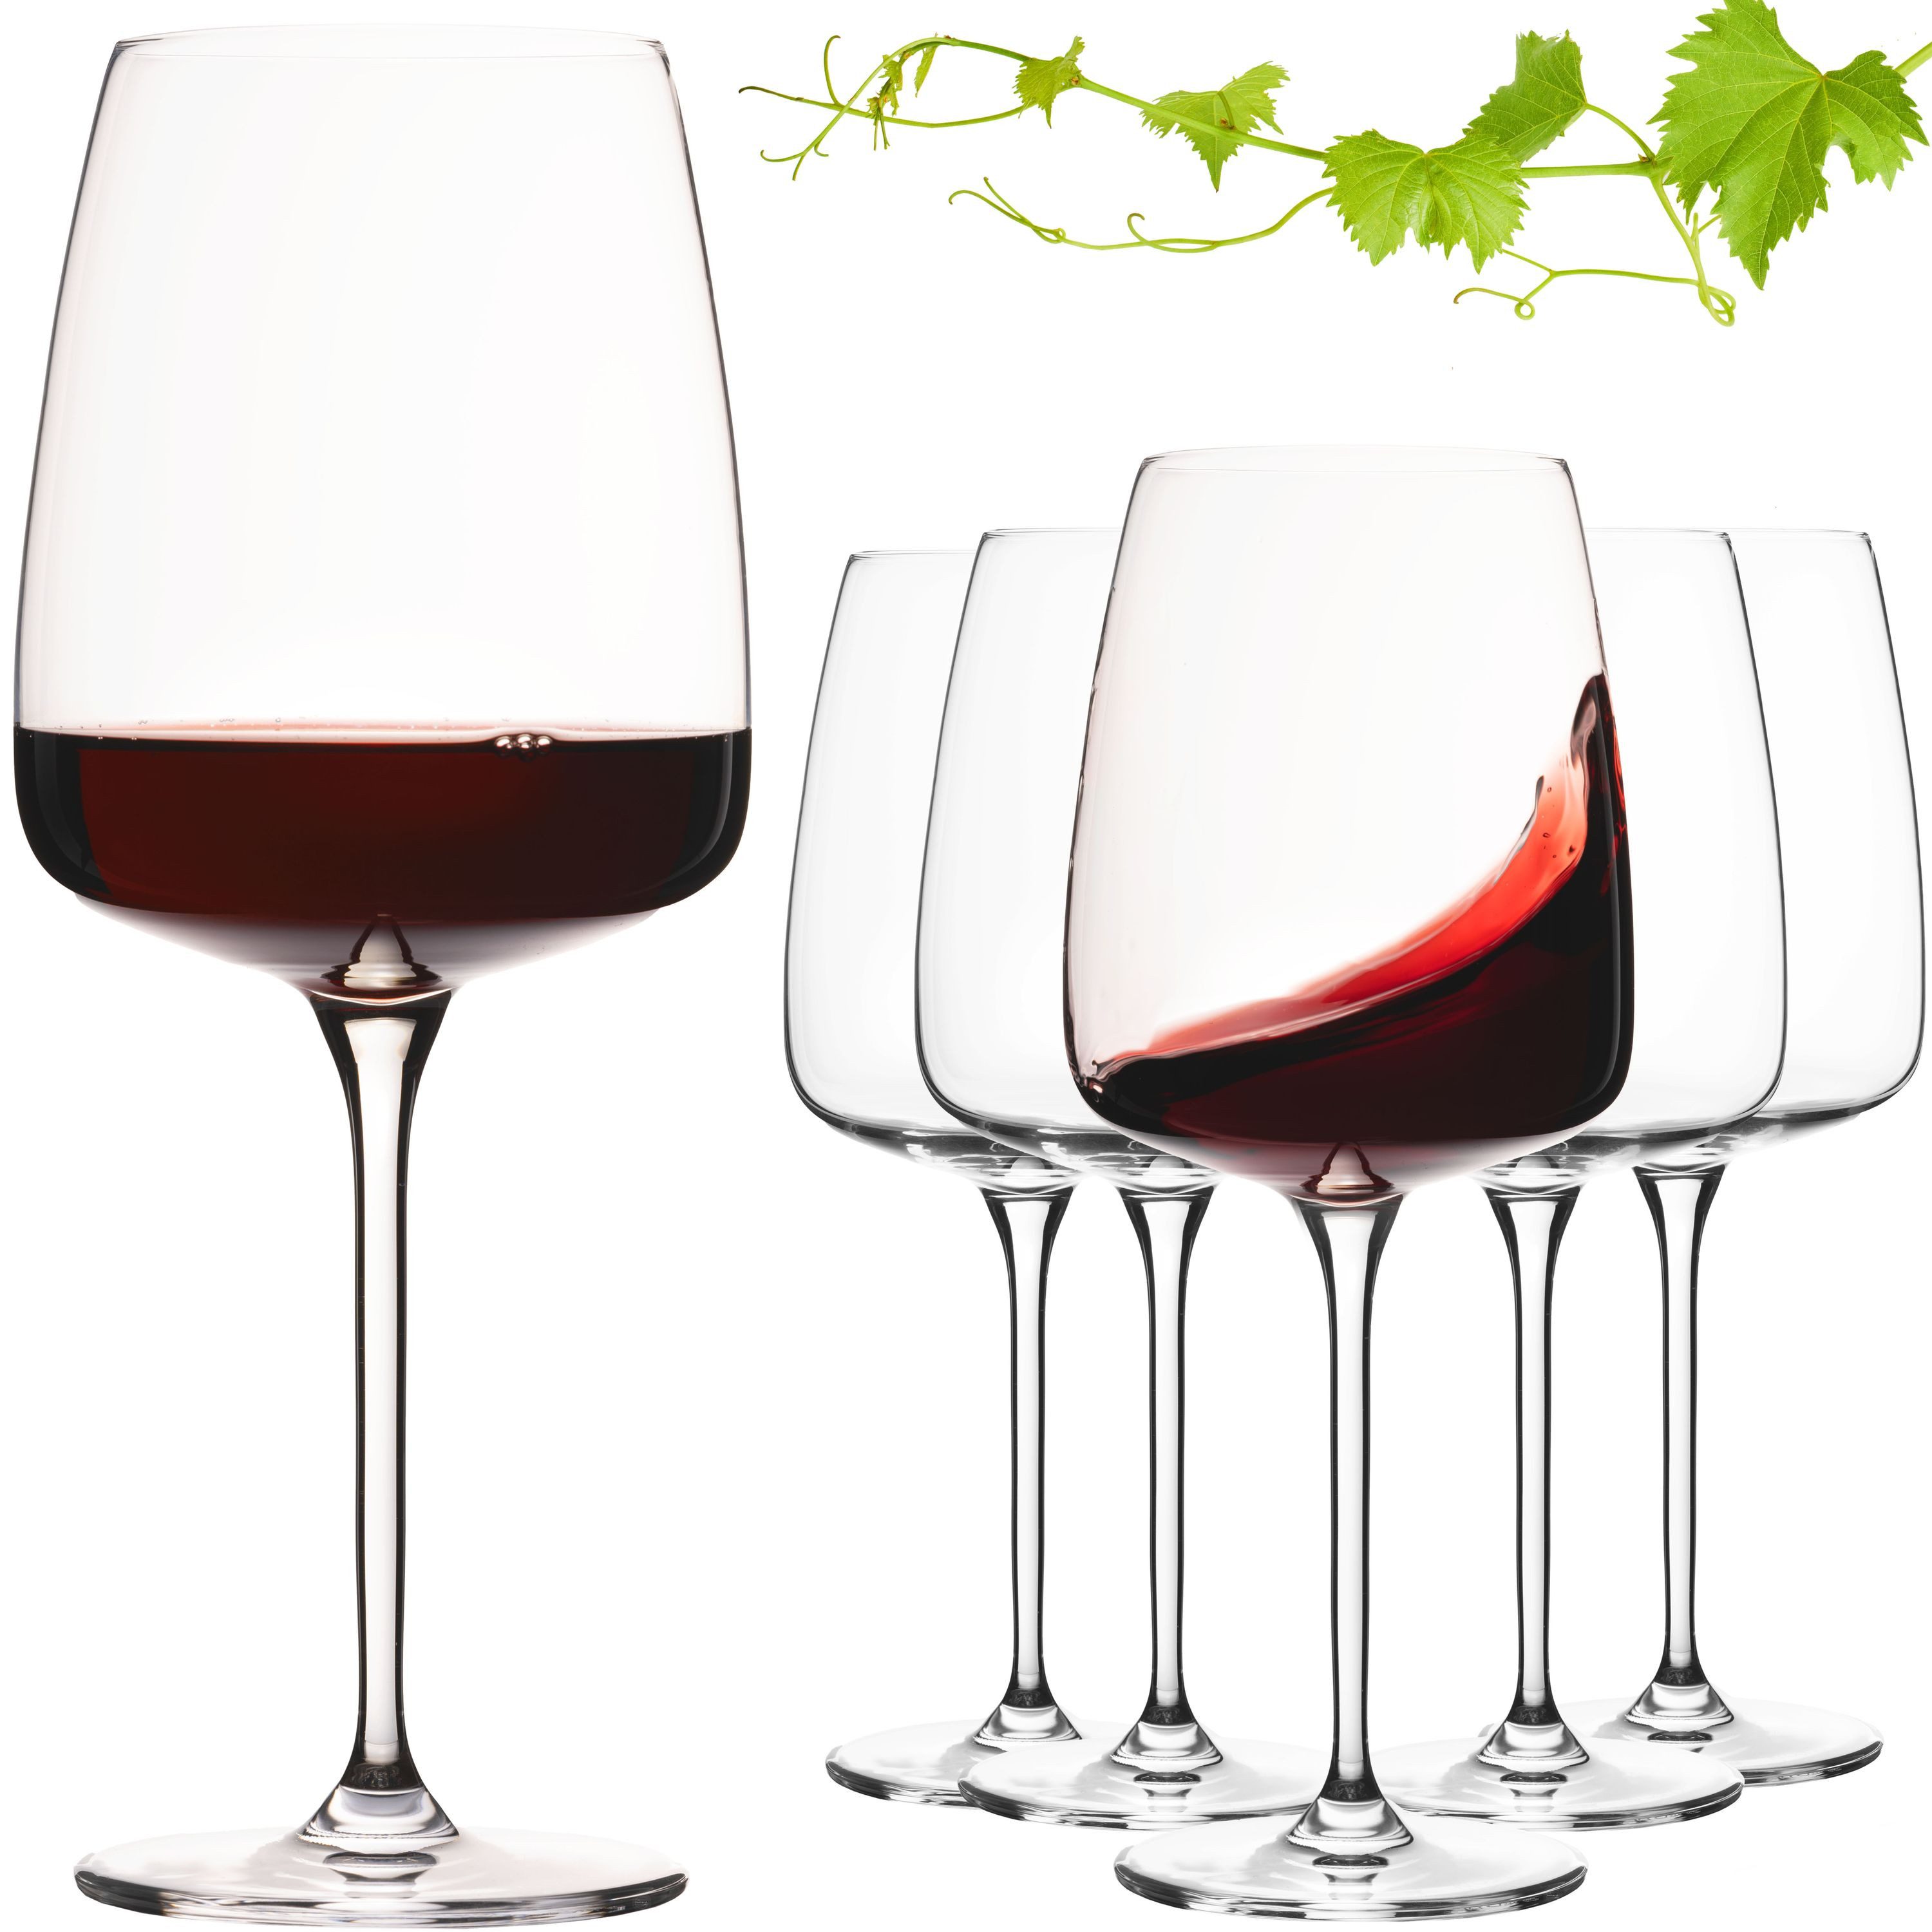 IMPERIAL glass Weinglas Große eckige Rotweingläser 600ml Set 6-Teilig "Milano", Crystalline Glas, Burgundergläser aus Crystalline Glas Spülmaschinenfest